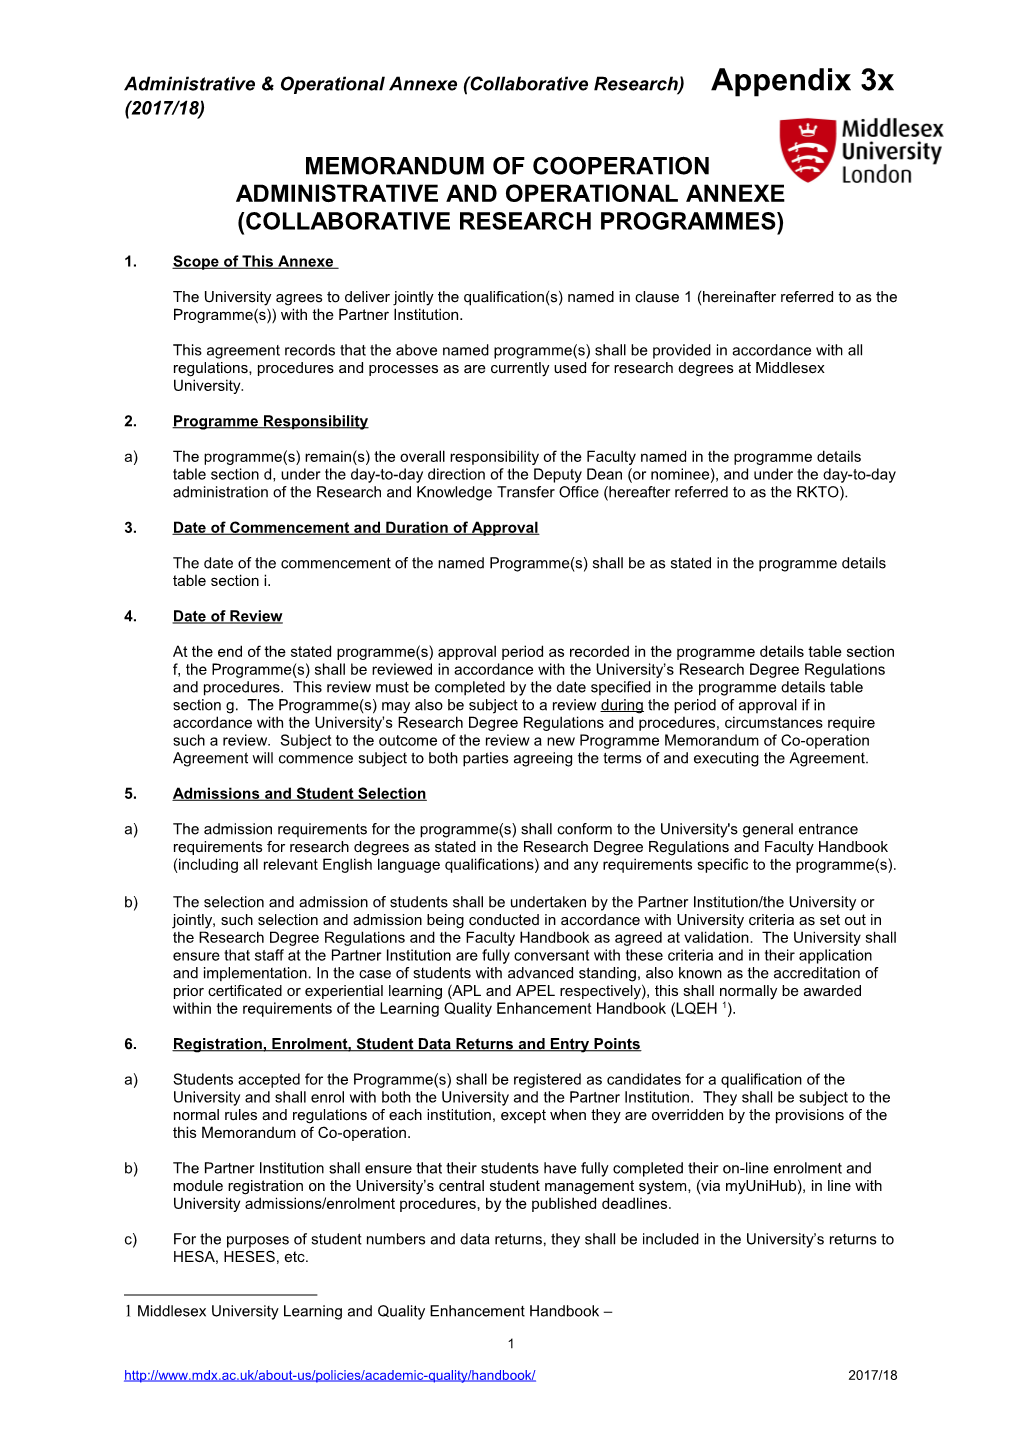 Administrative & Operational Annexe (Collaborative Research) Appendix 3X(2017/18)